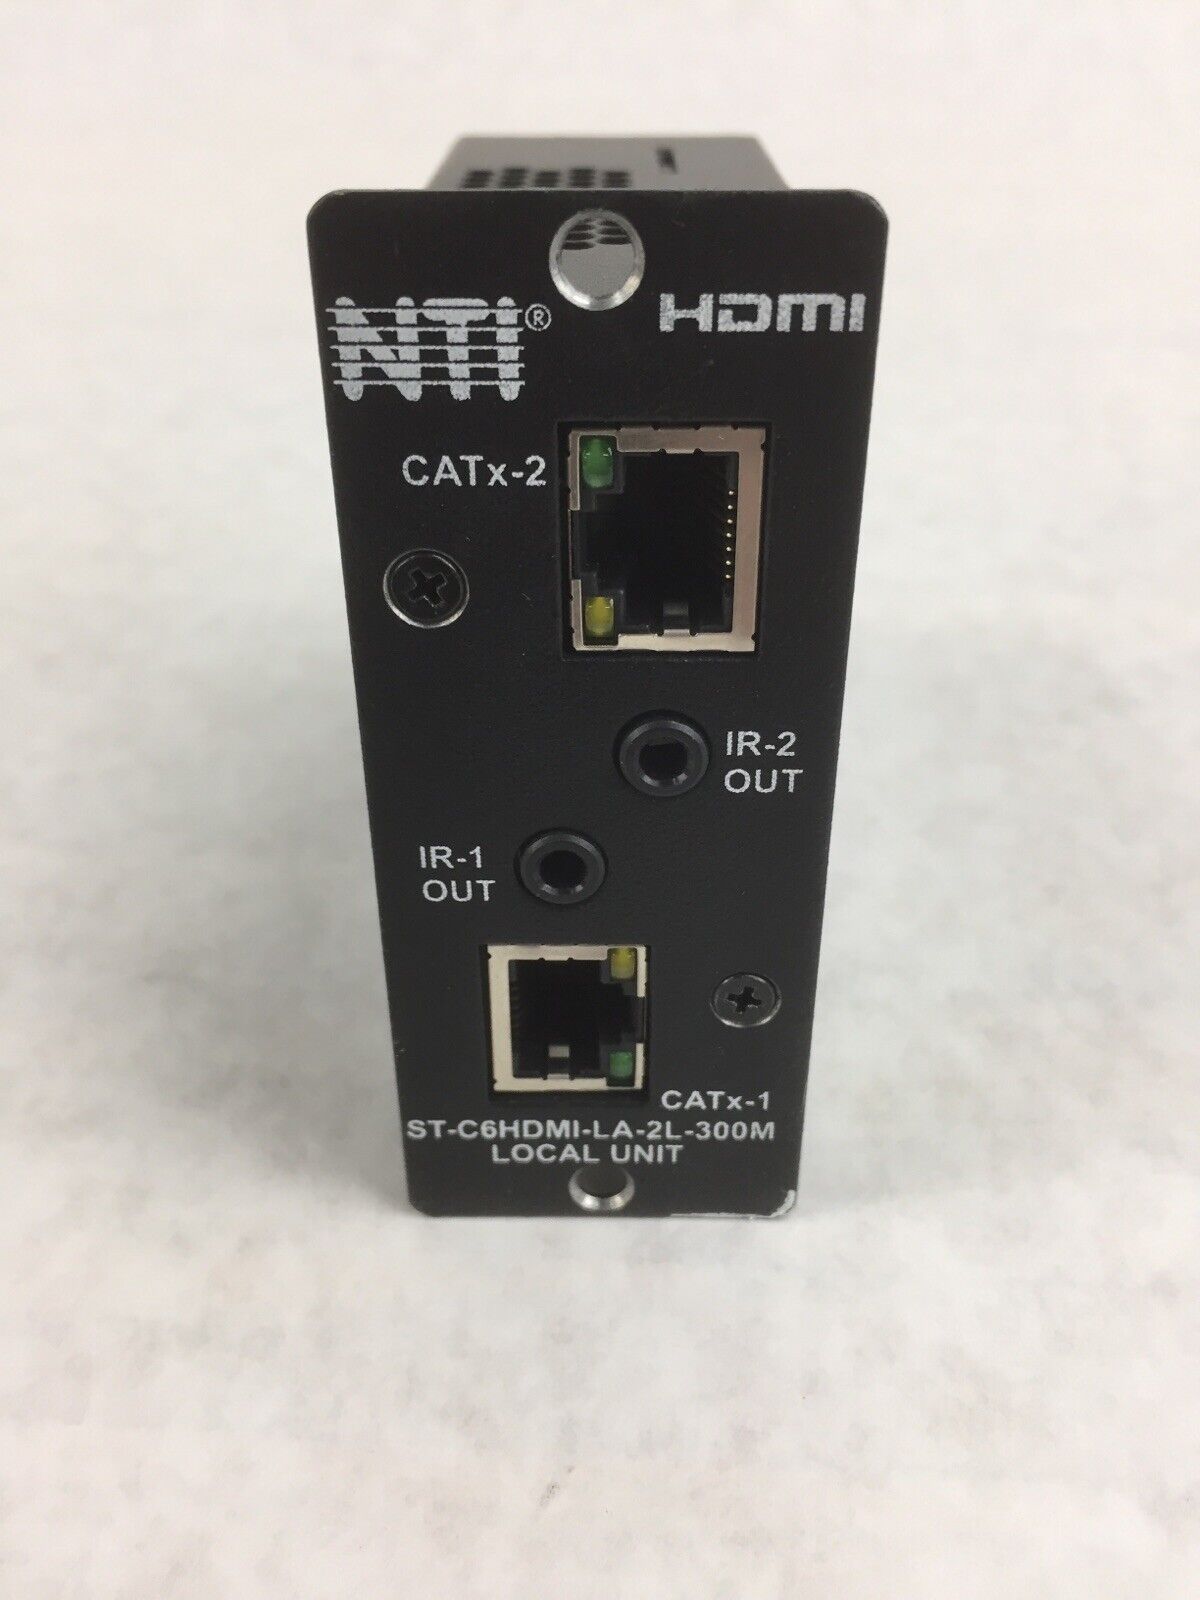 NTI Xtendex Local Unit HDMI ST-C6HDMI-LA-2l-300M - 2 IR Outs CATx-2 with adapter